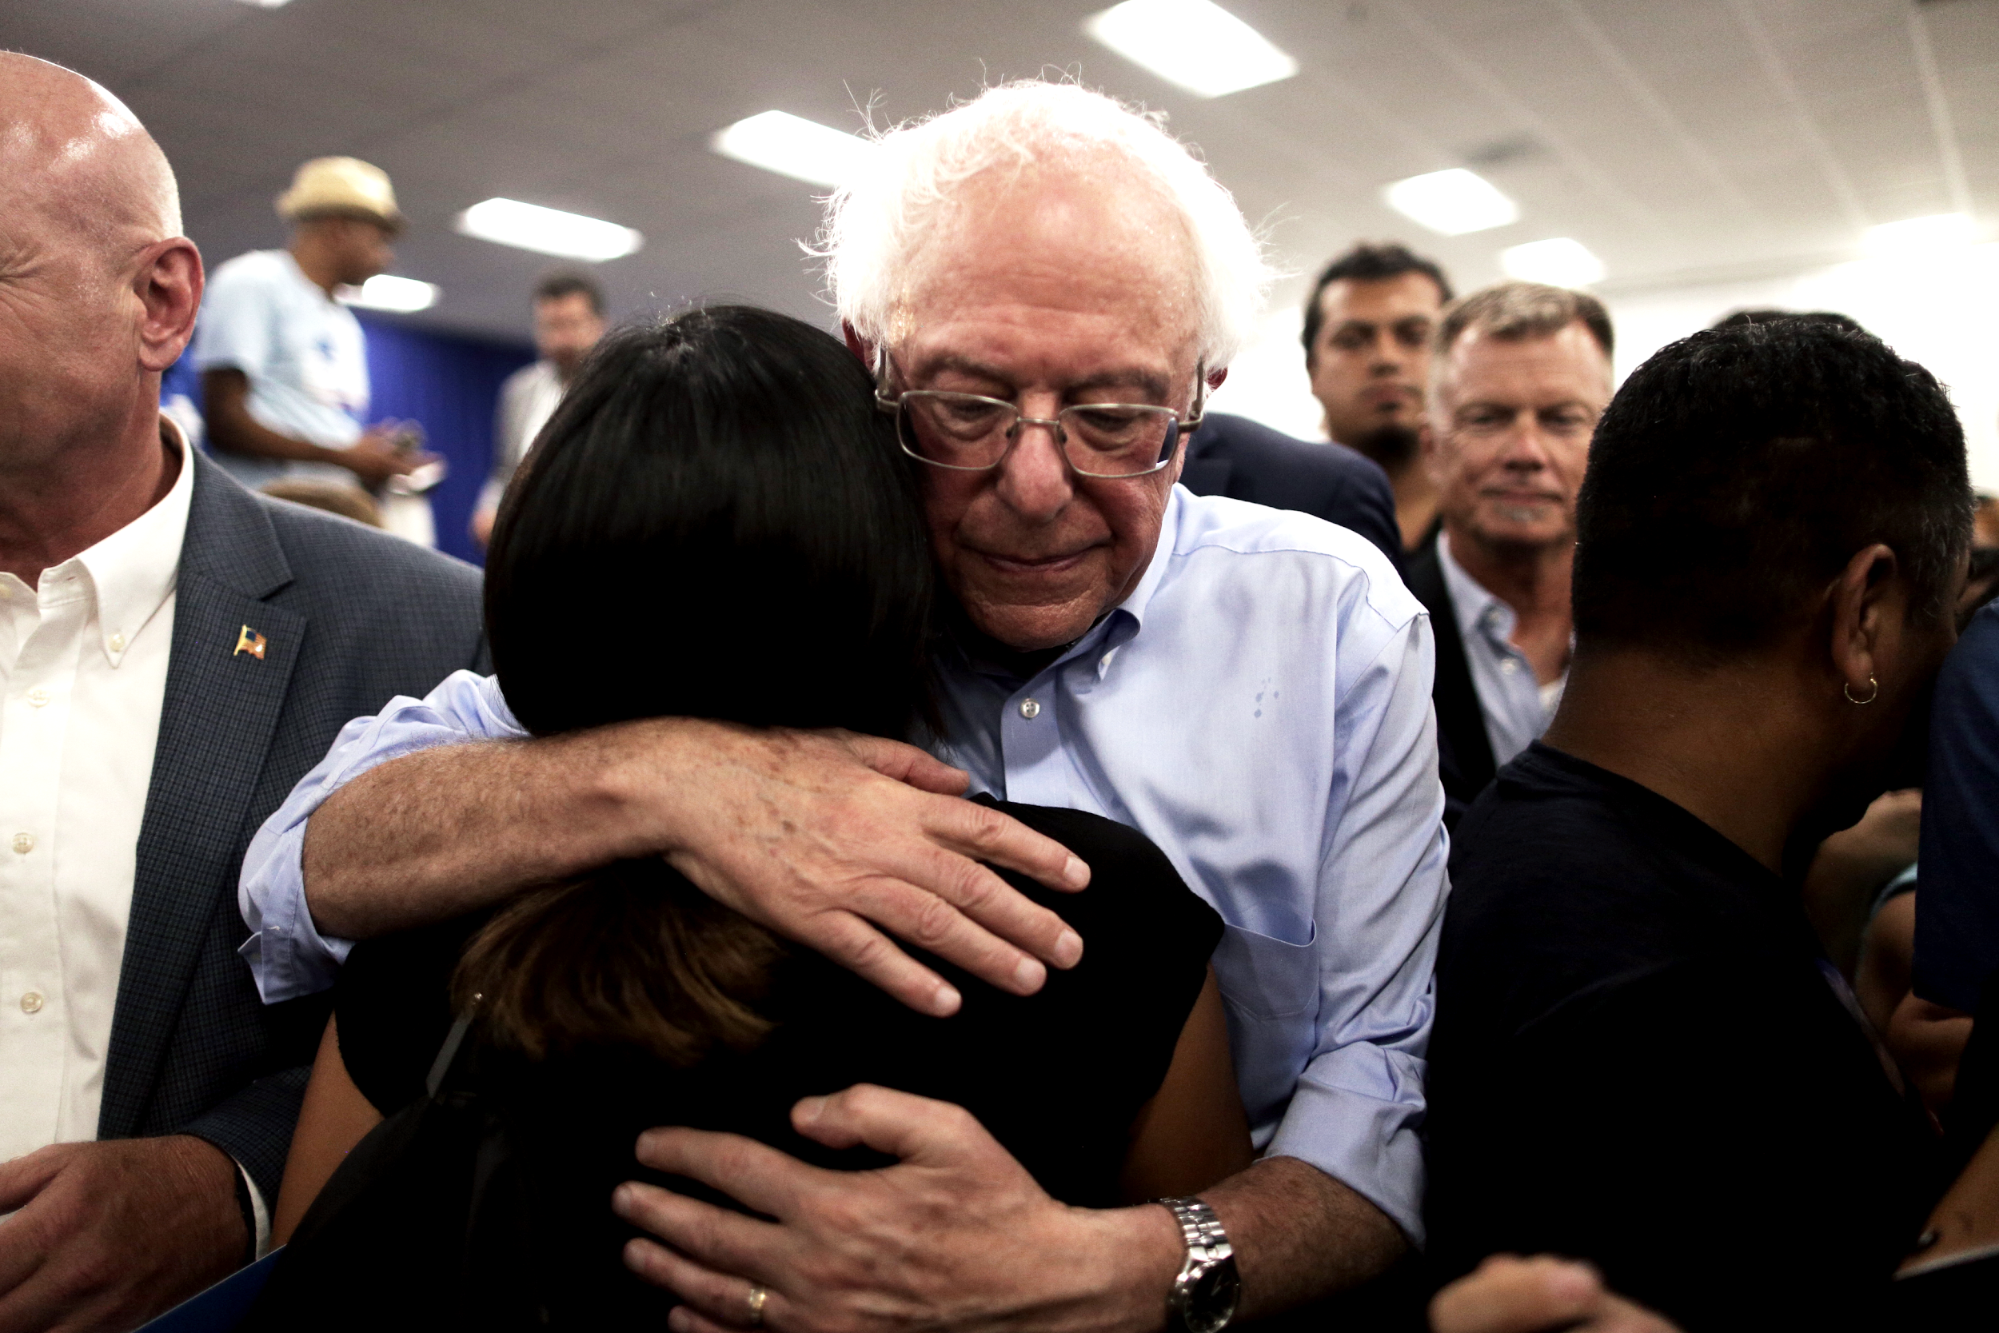 Bernie hugging supporter.